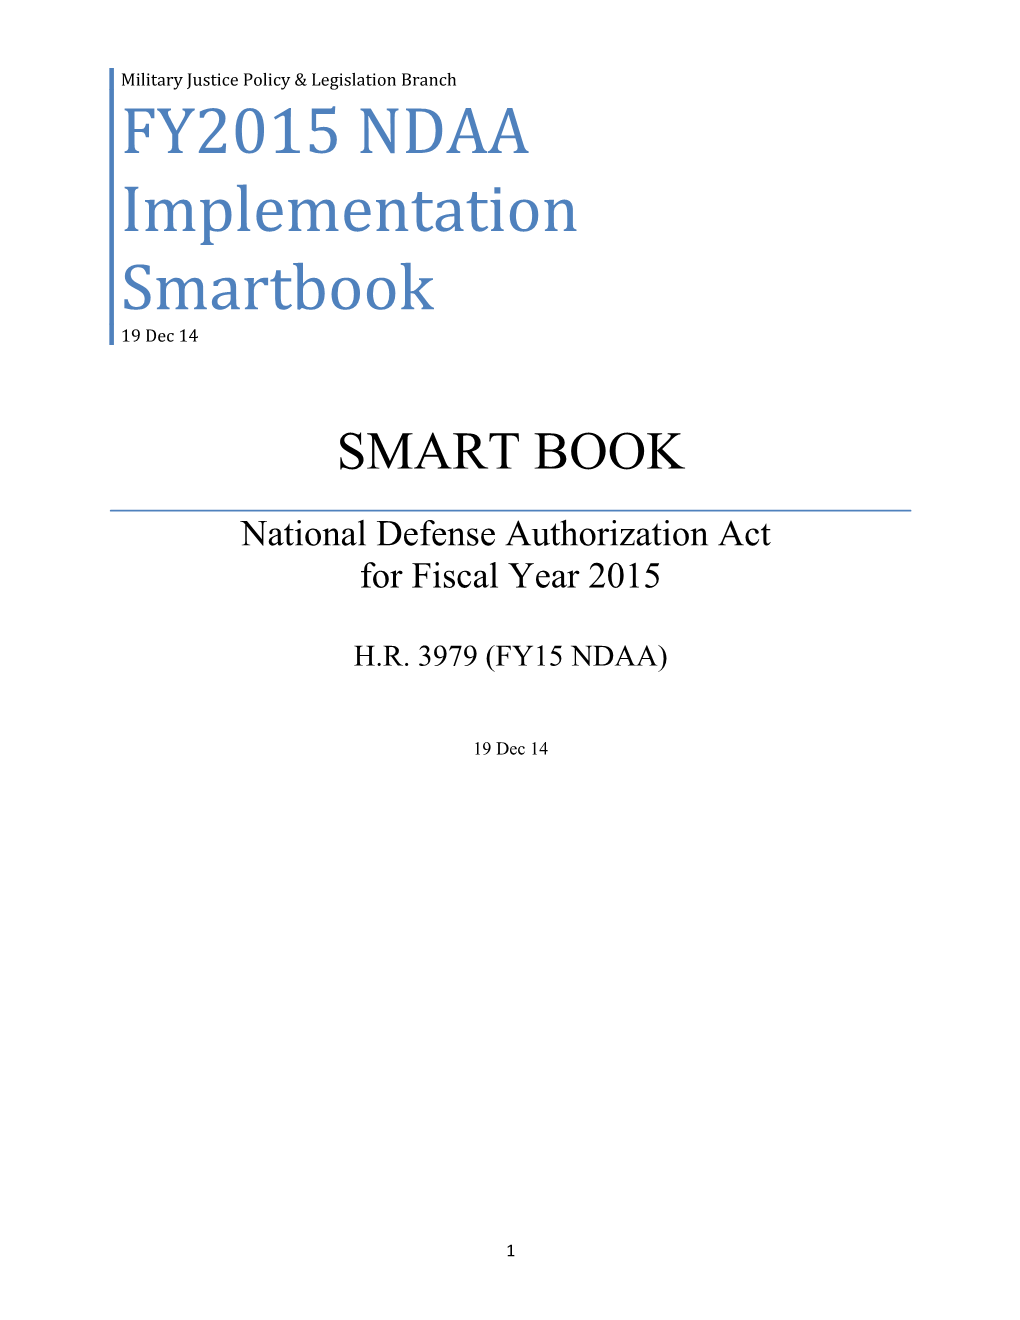 FY2015 NDAA Implementation Smartbook